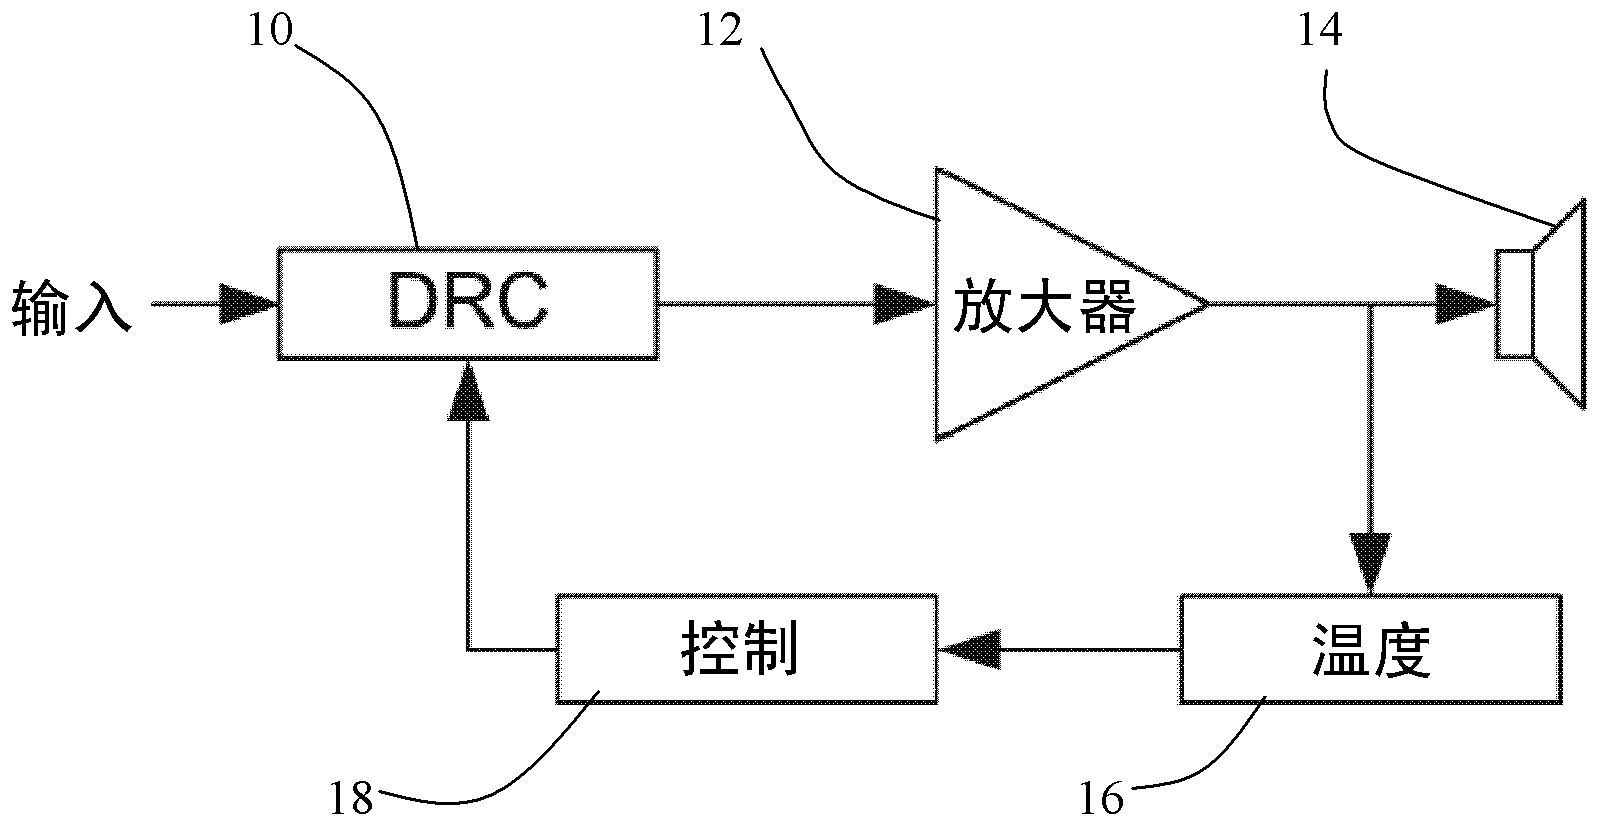 Control of loudspeaker output